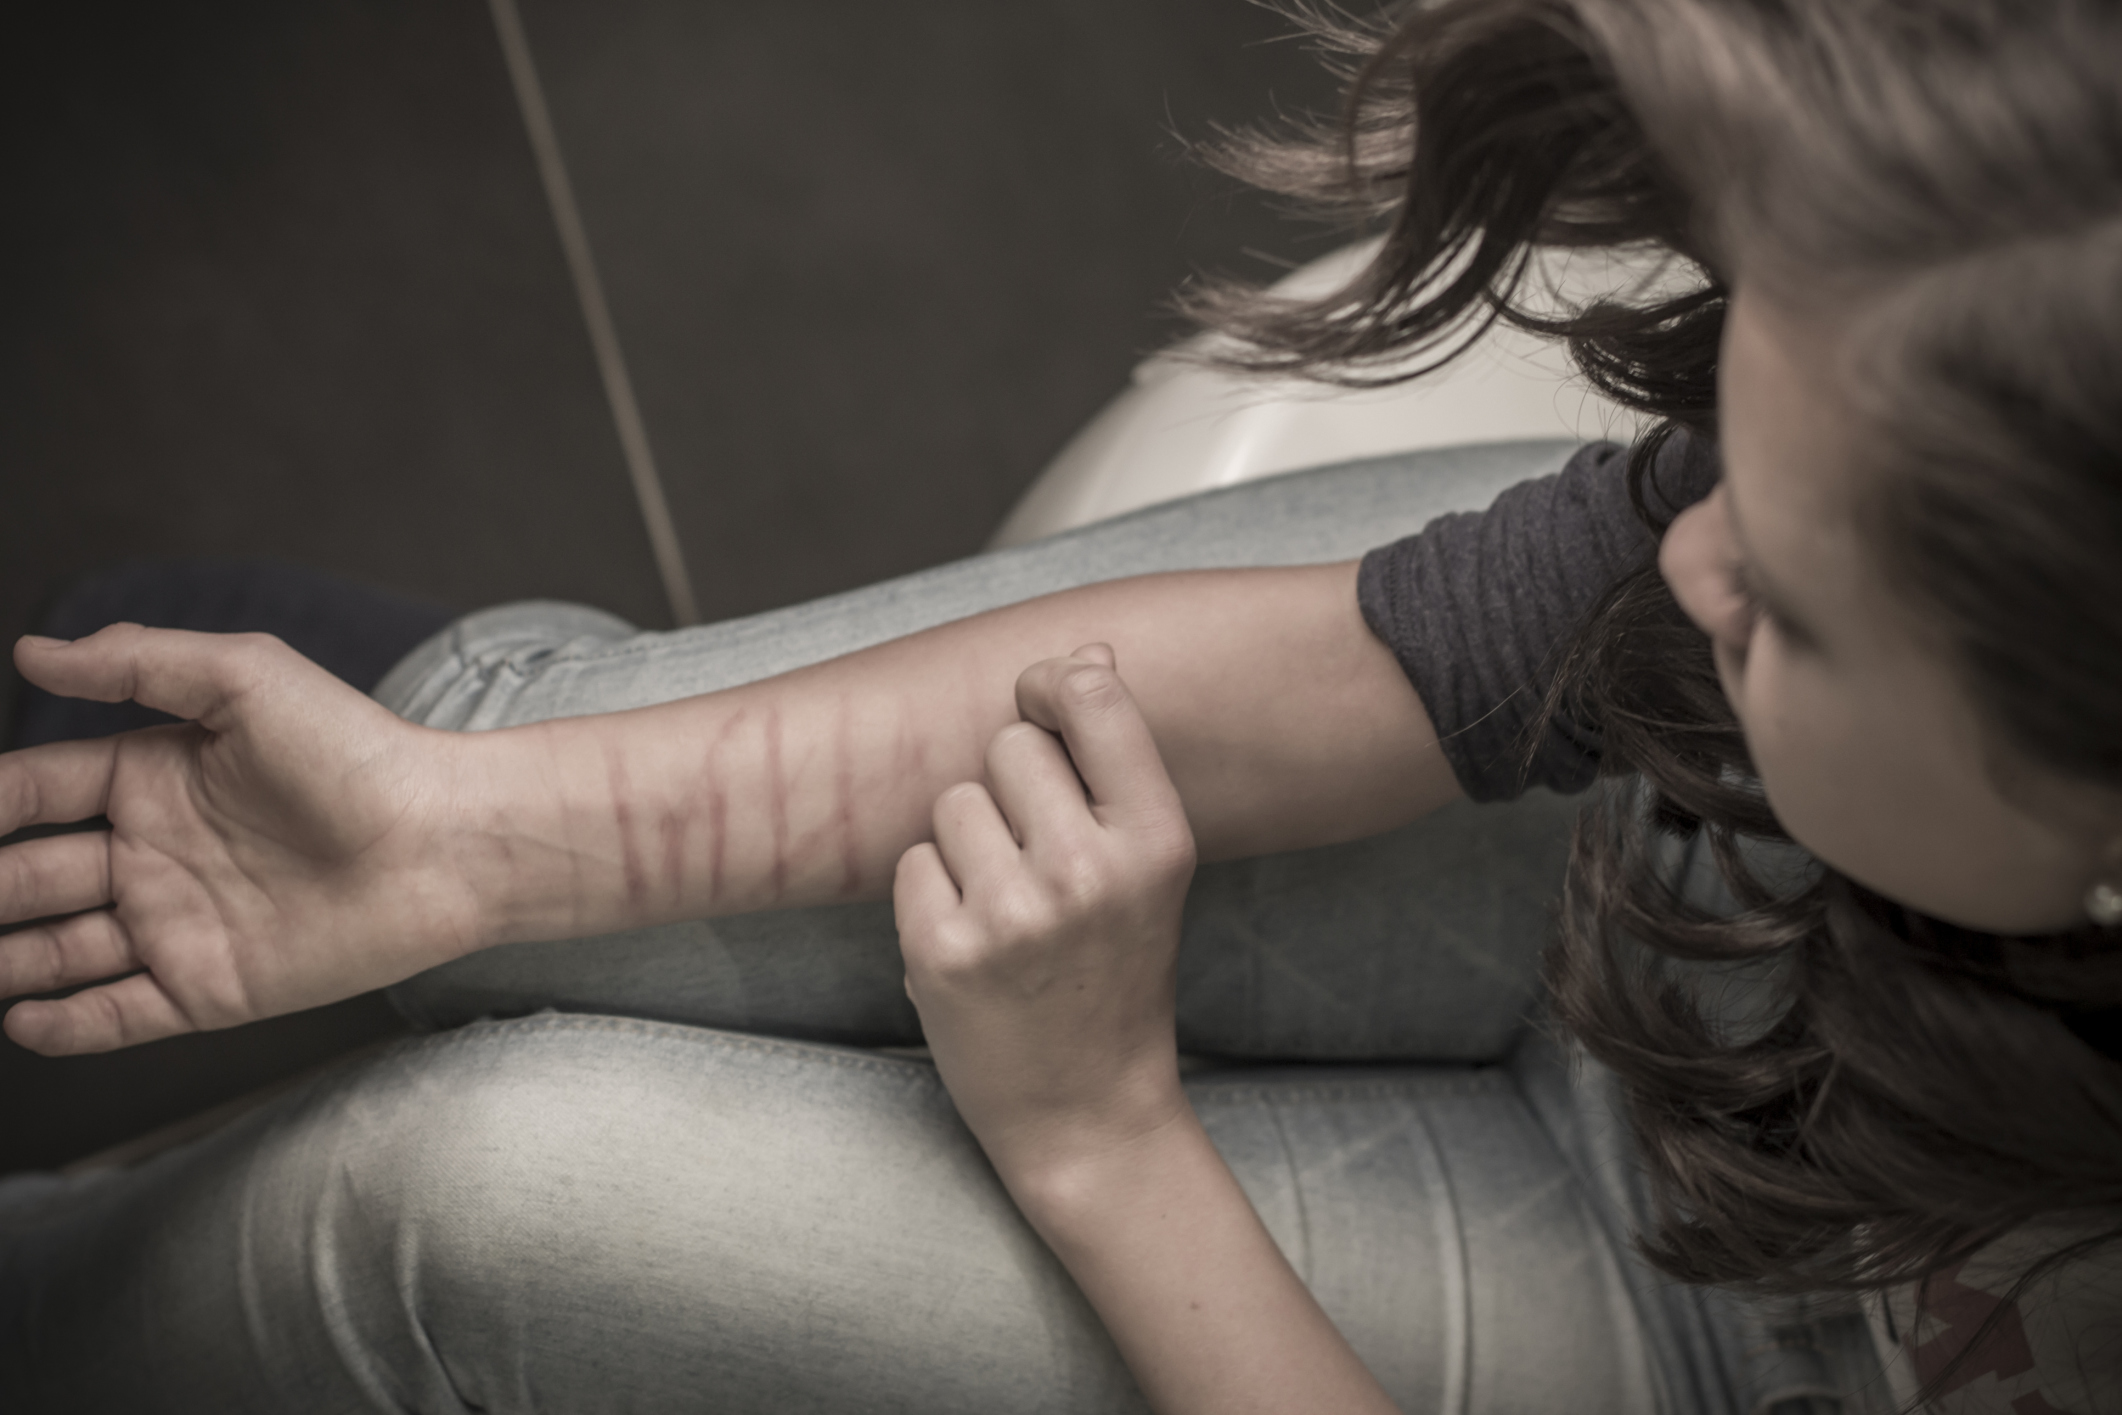 teens cutting self mutilation hd pic